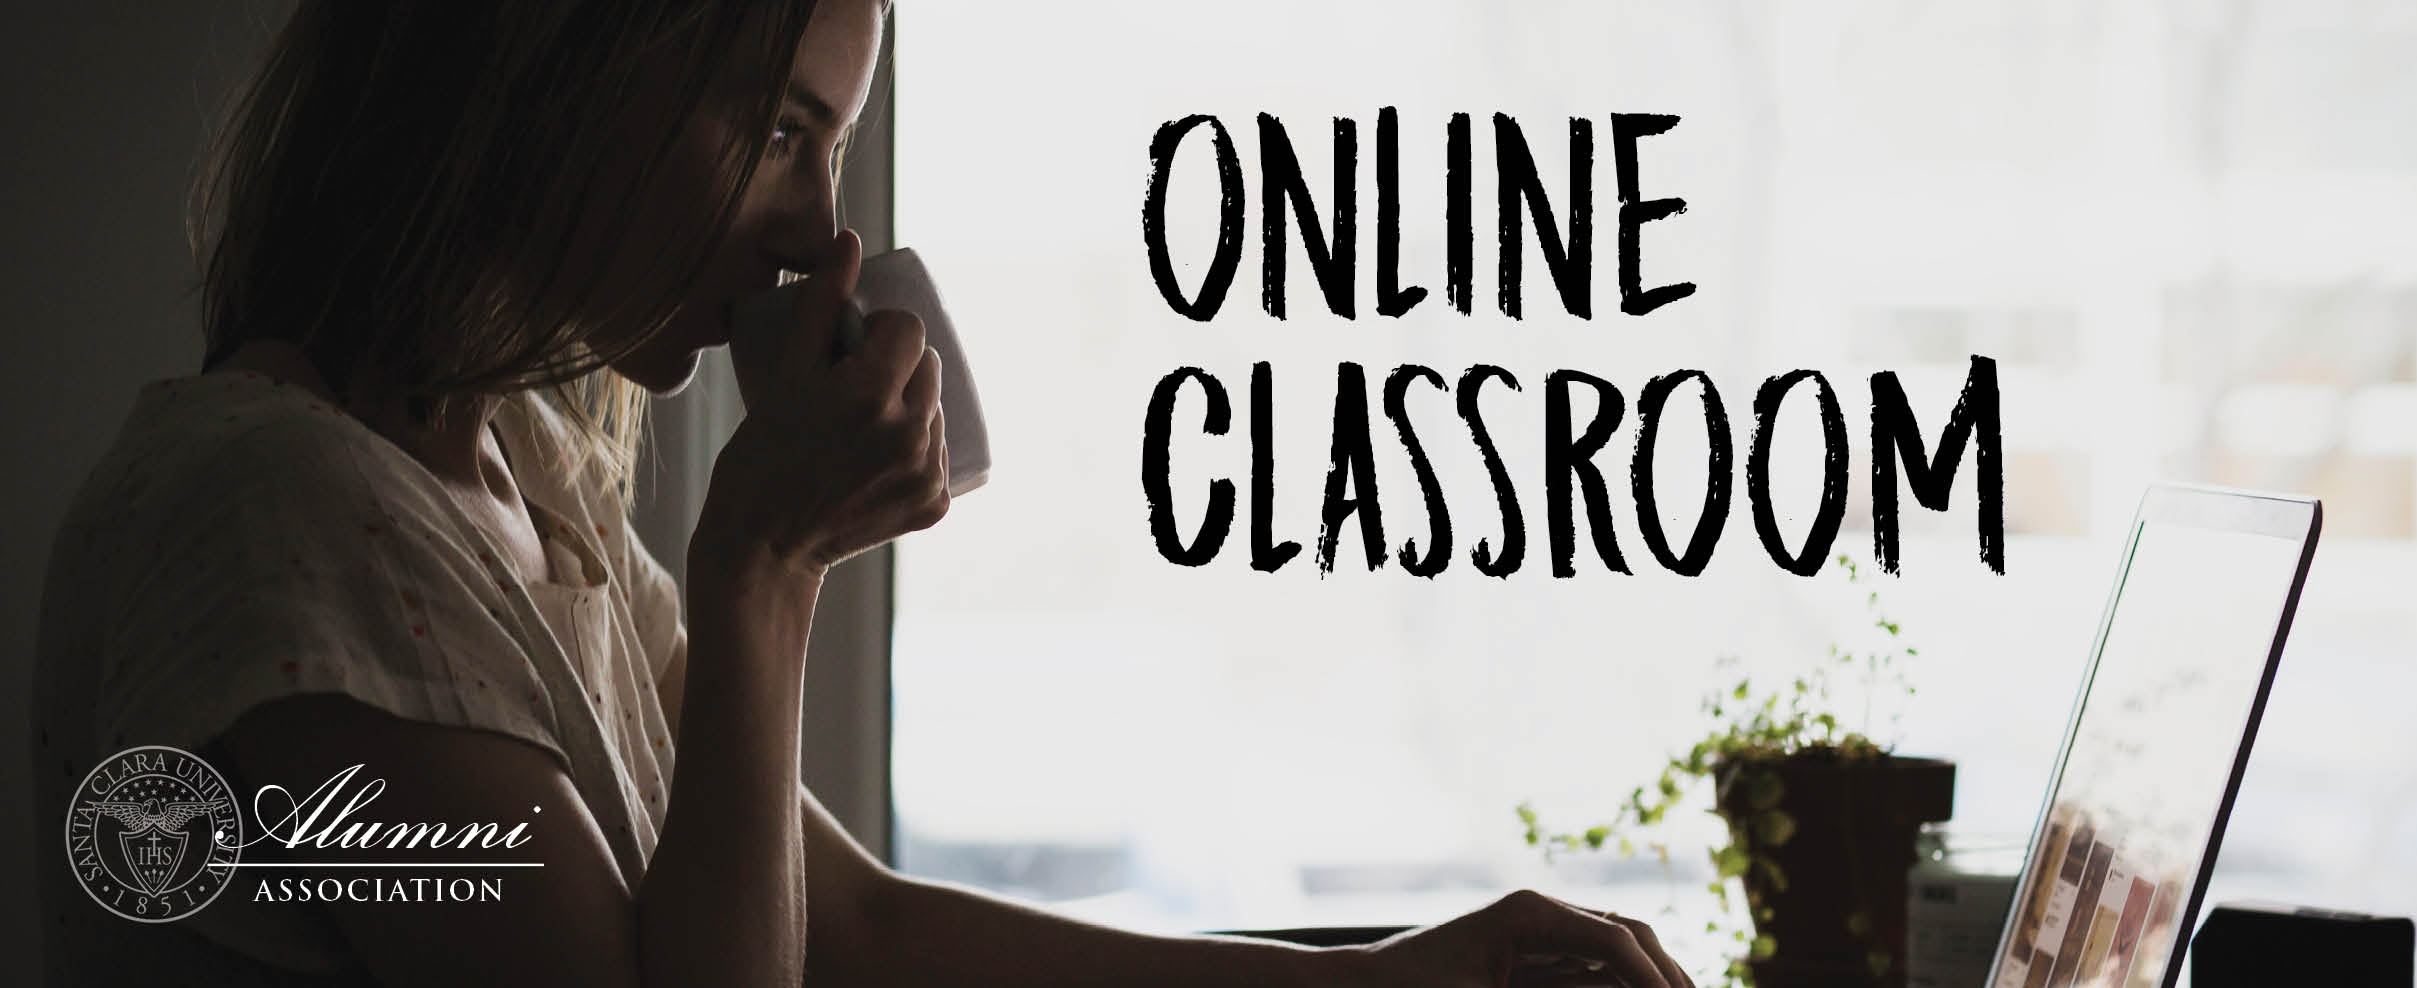 Online Classroom Header - Online Classroom  Link to file